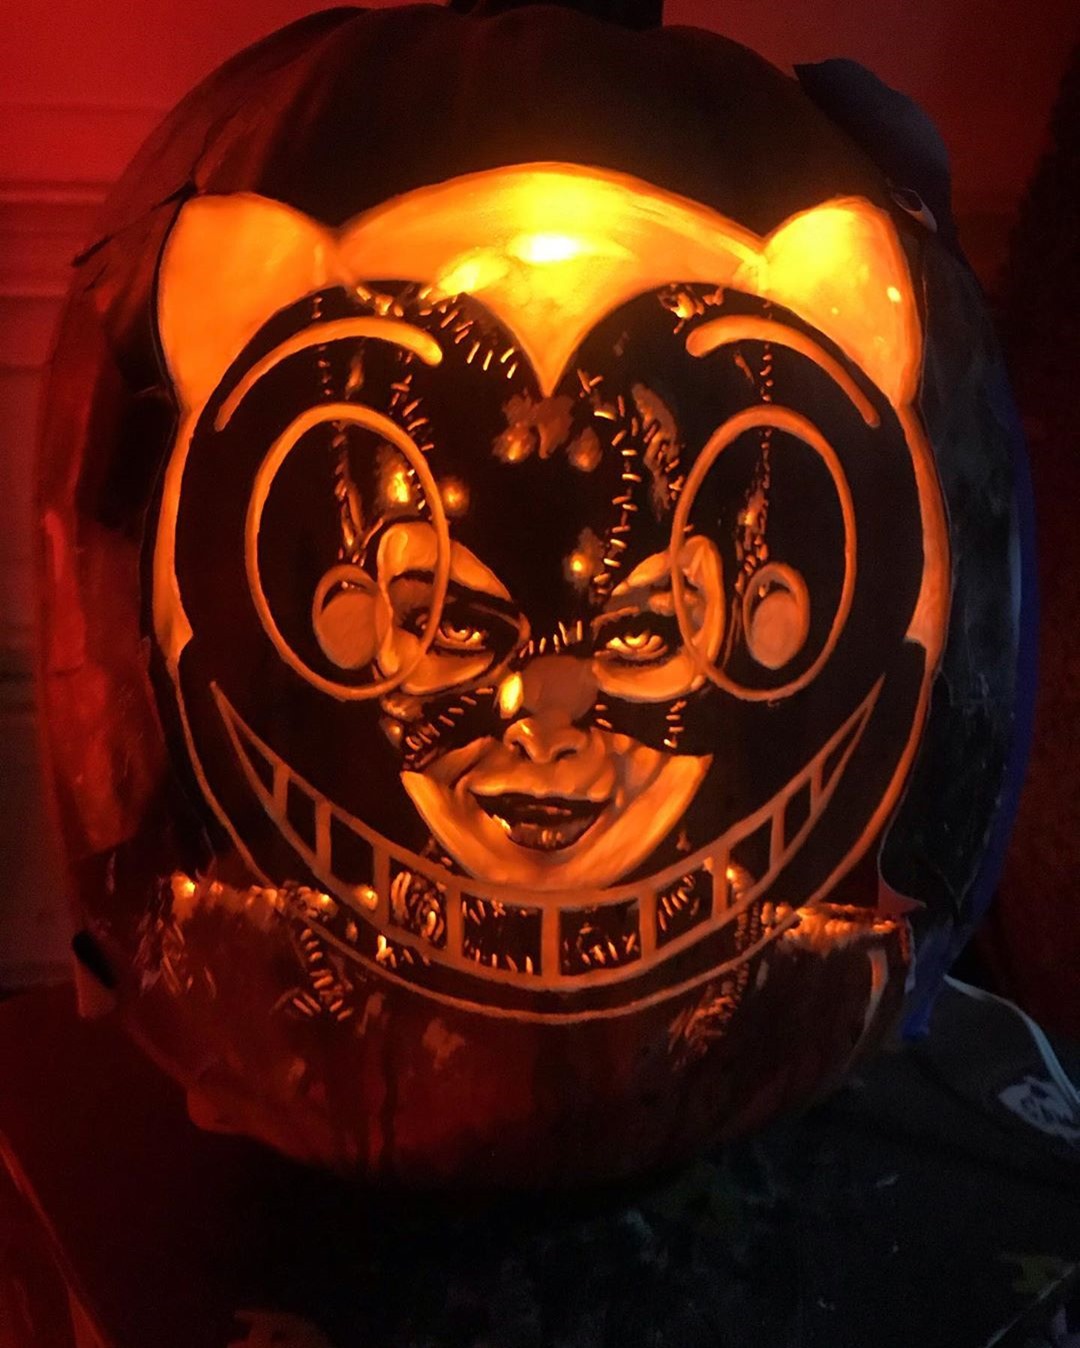 In Progress Photo of Catwoman Pumpkin